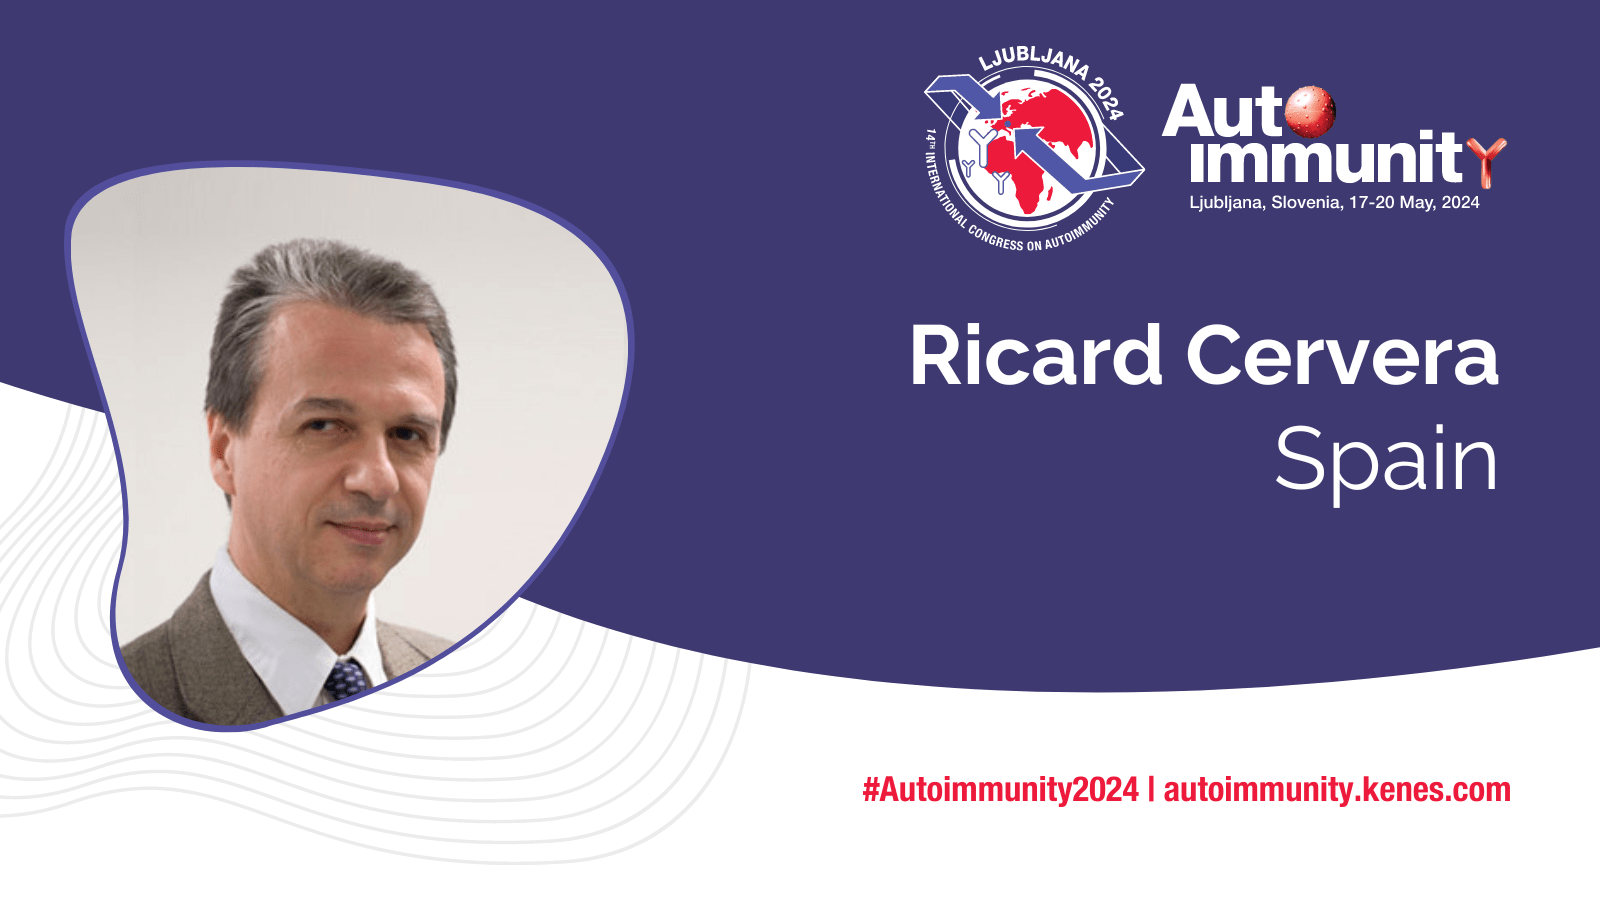 International Congress on Autoimmunity 2024 Speaker Ricard Cervera